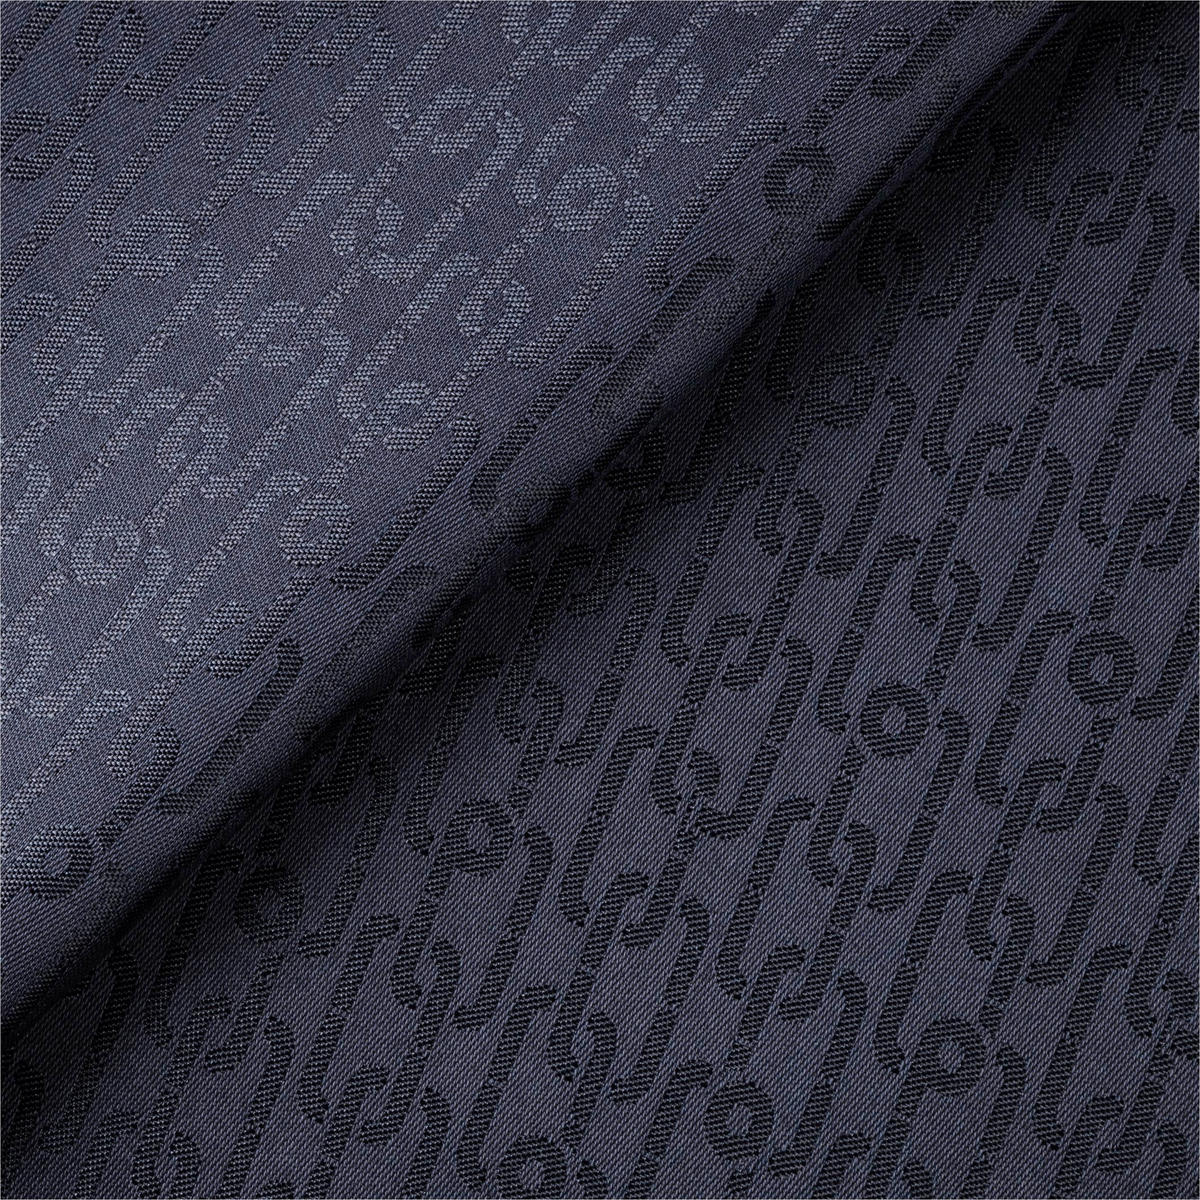 TISCHDECKE Chains 160 cm  - Blau/Dunkelblau, Design, Textil (160cm) - Joop!